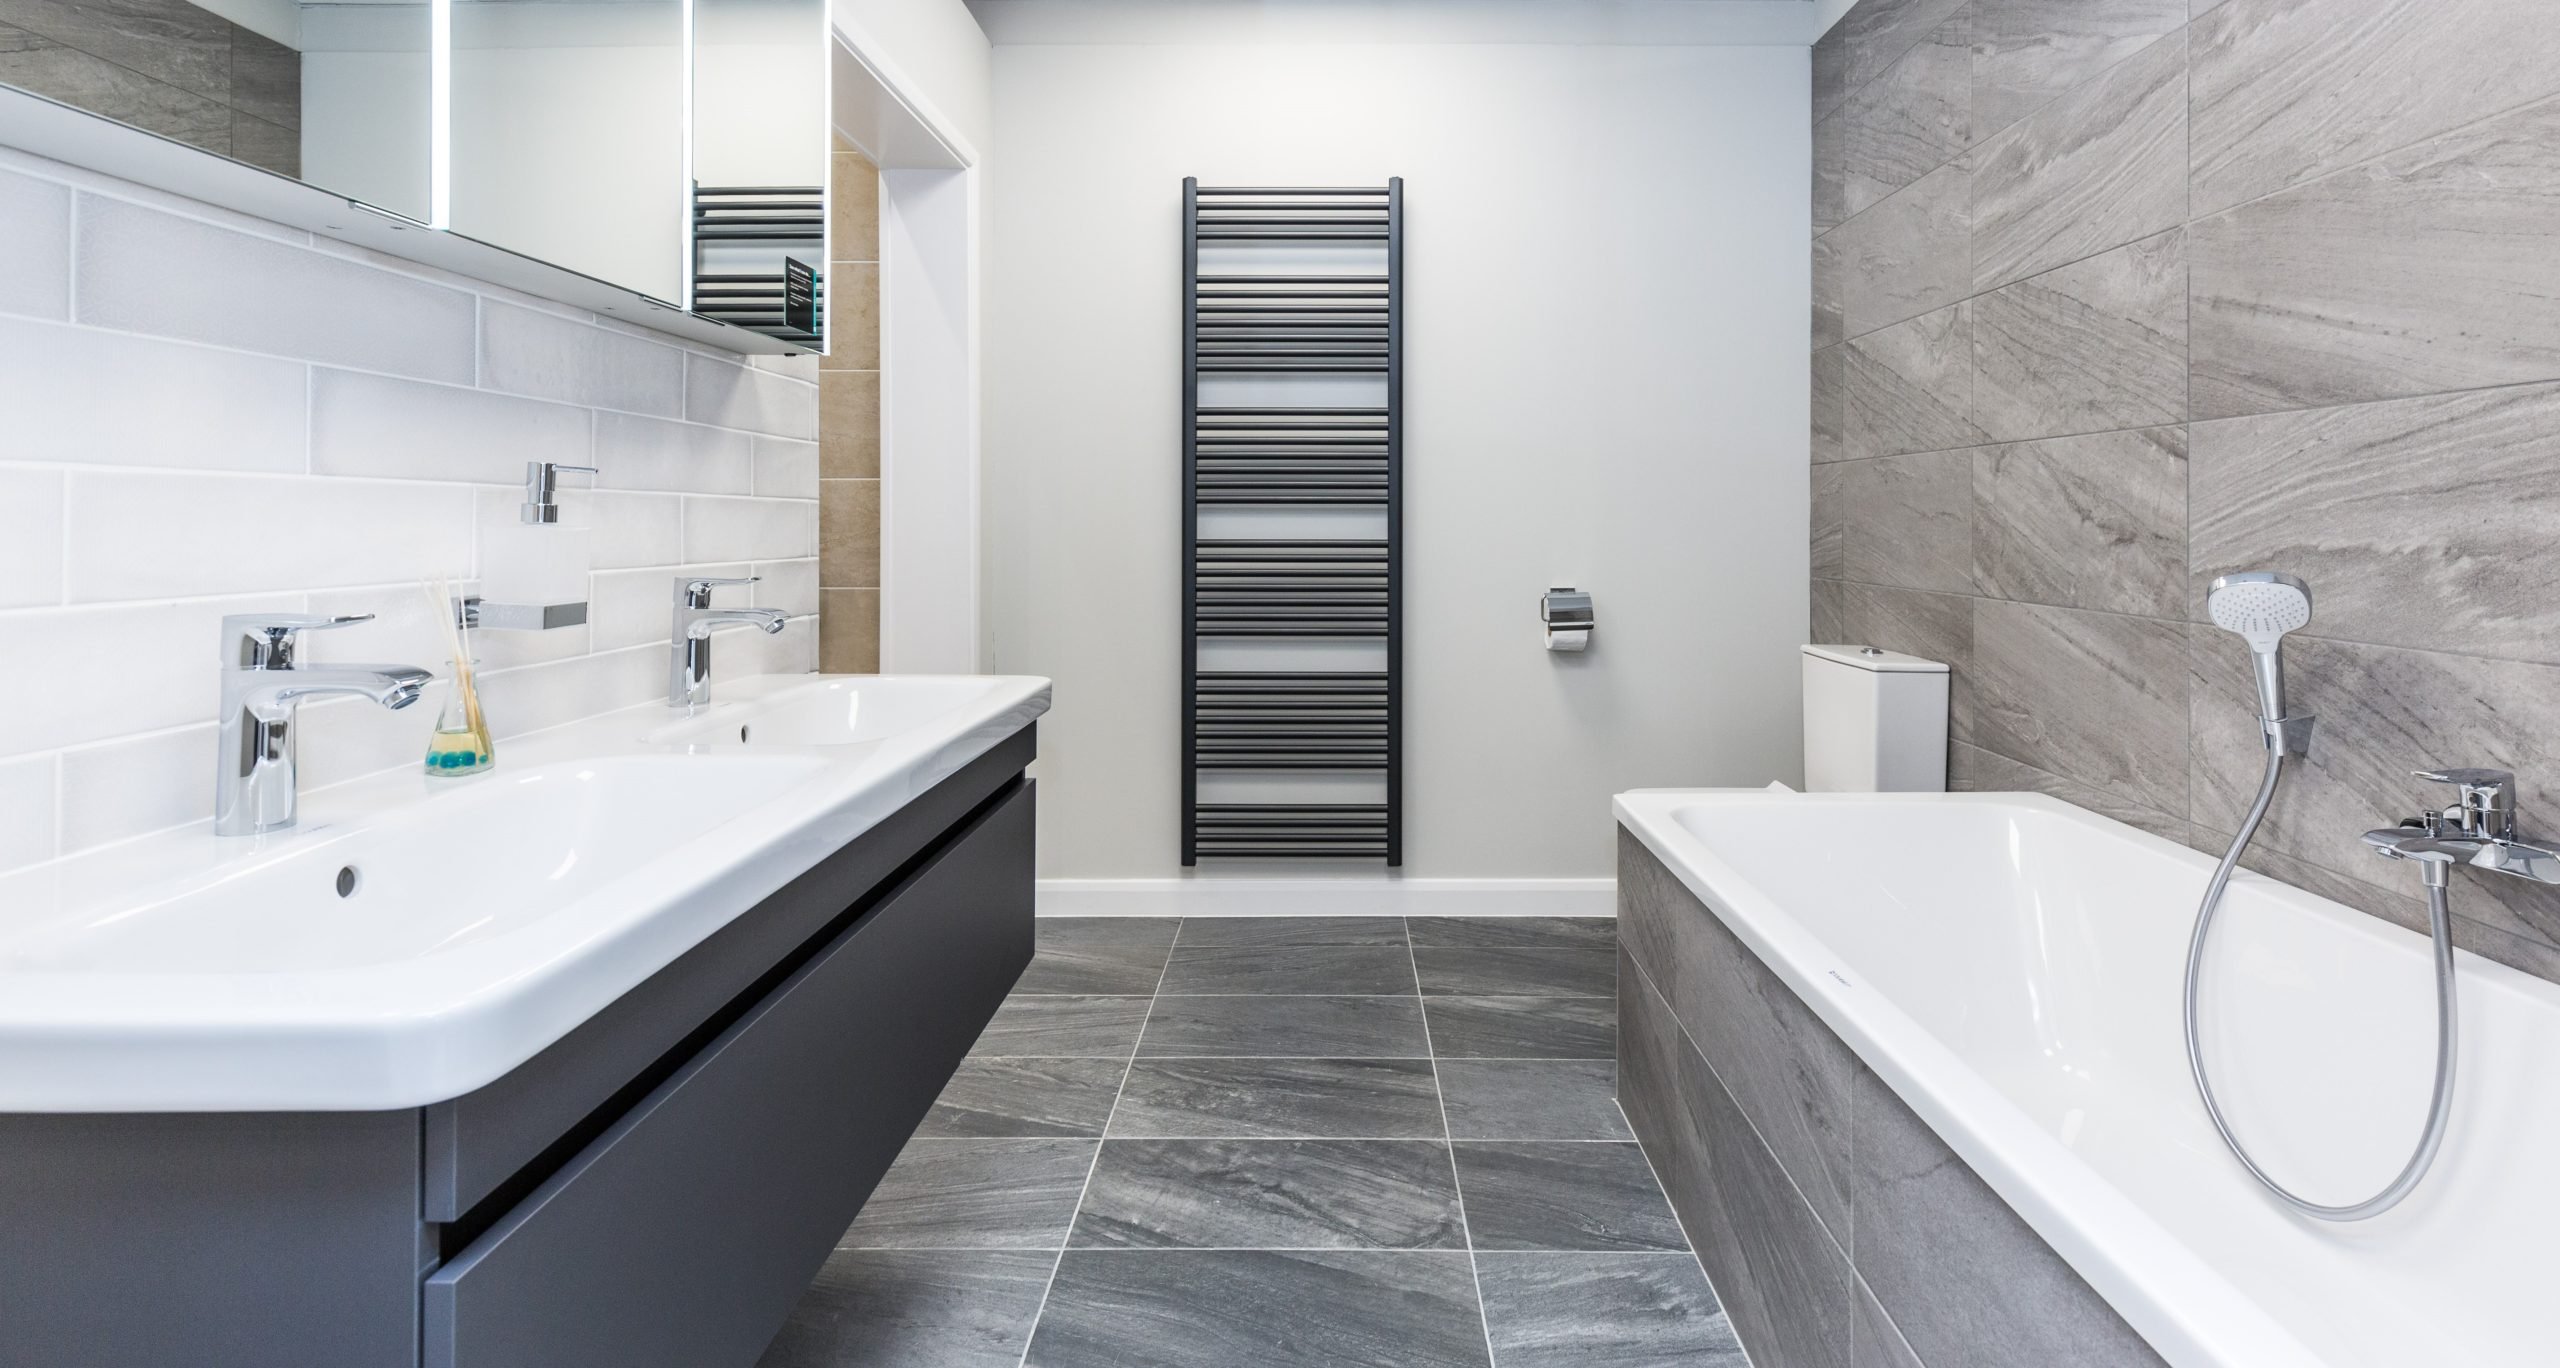 Bathroom Ideas - monochrome bathroom with grey tones